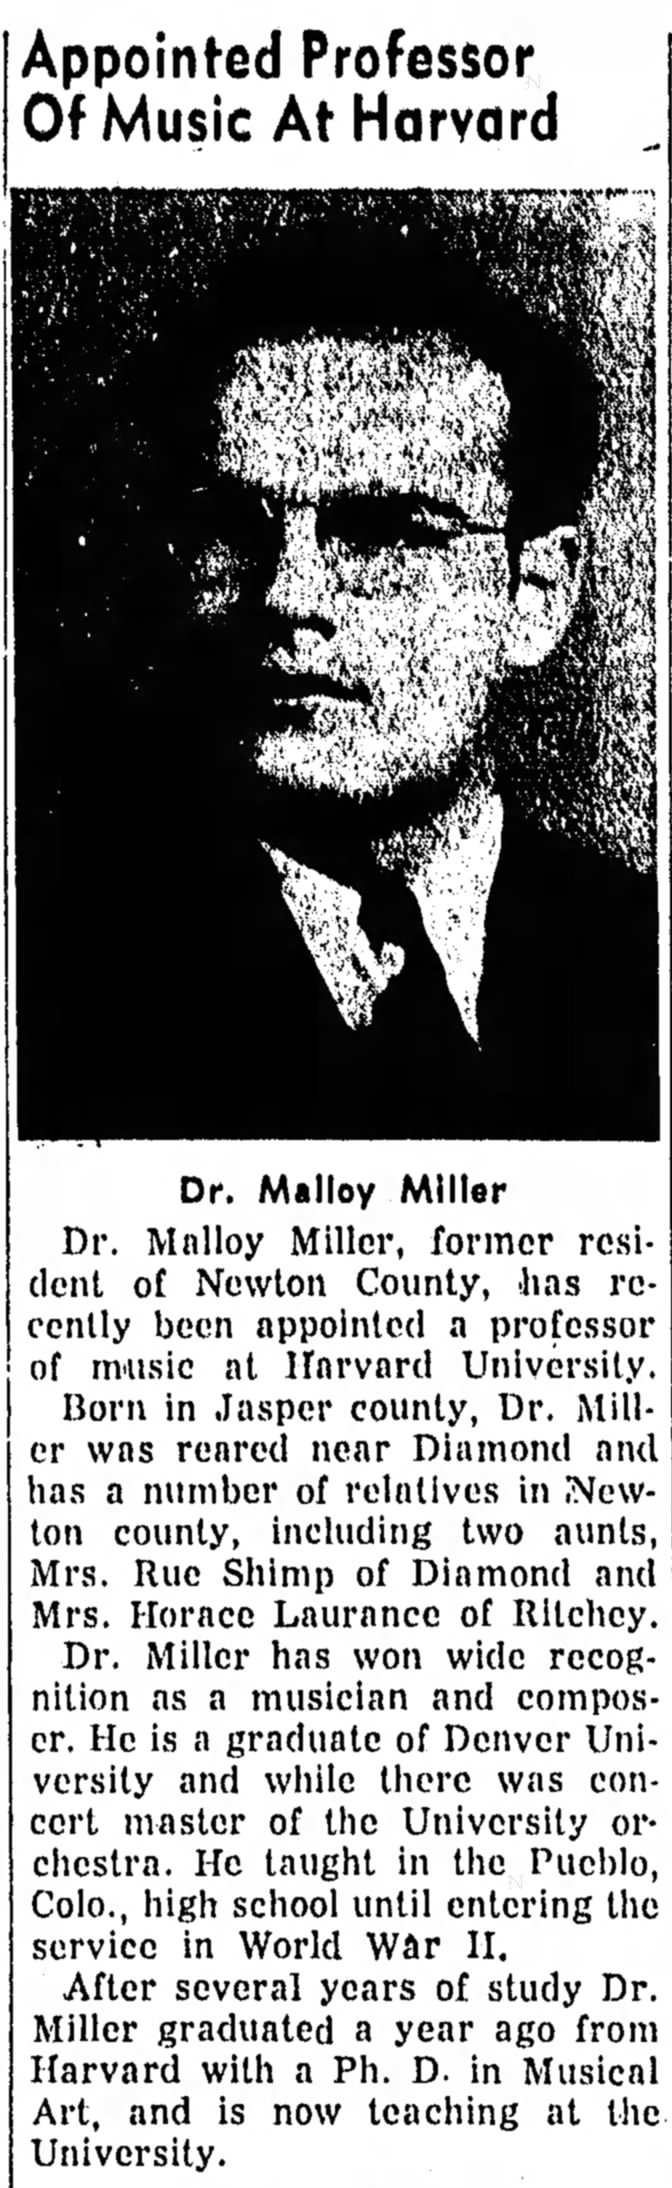 Malloy Miller appointed professor of music at Harvard University